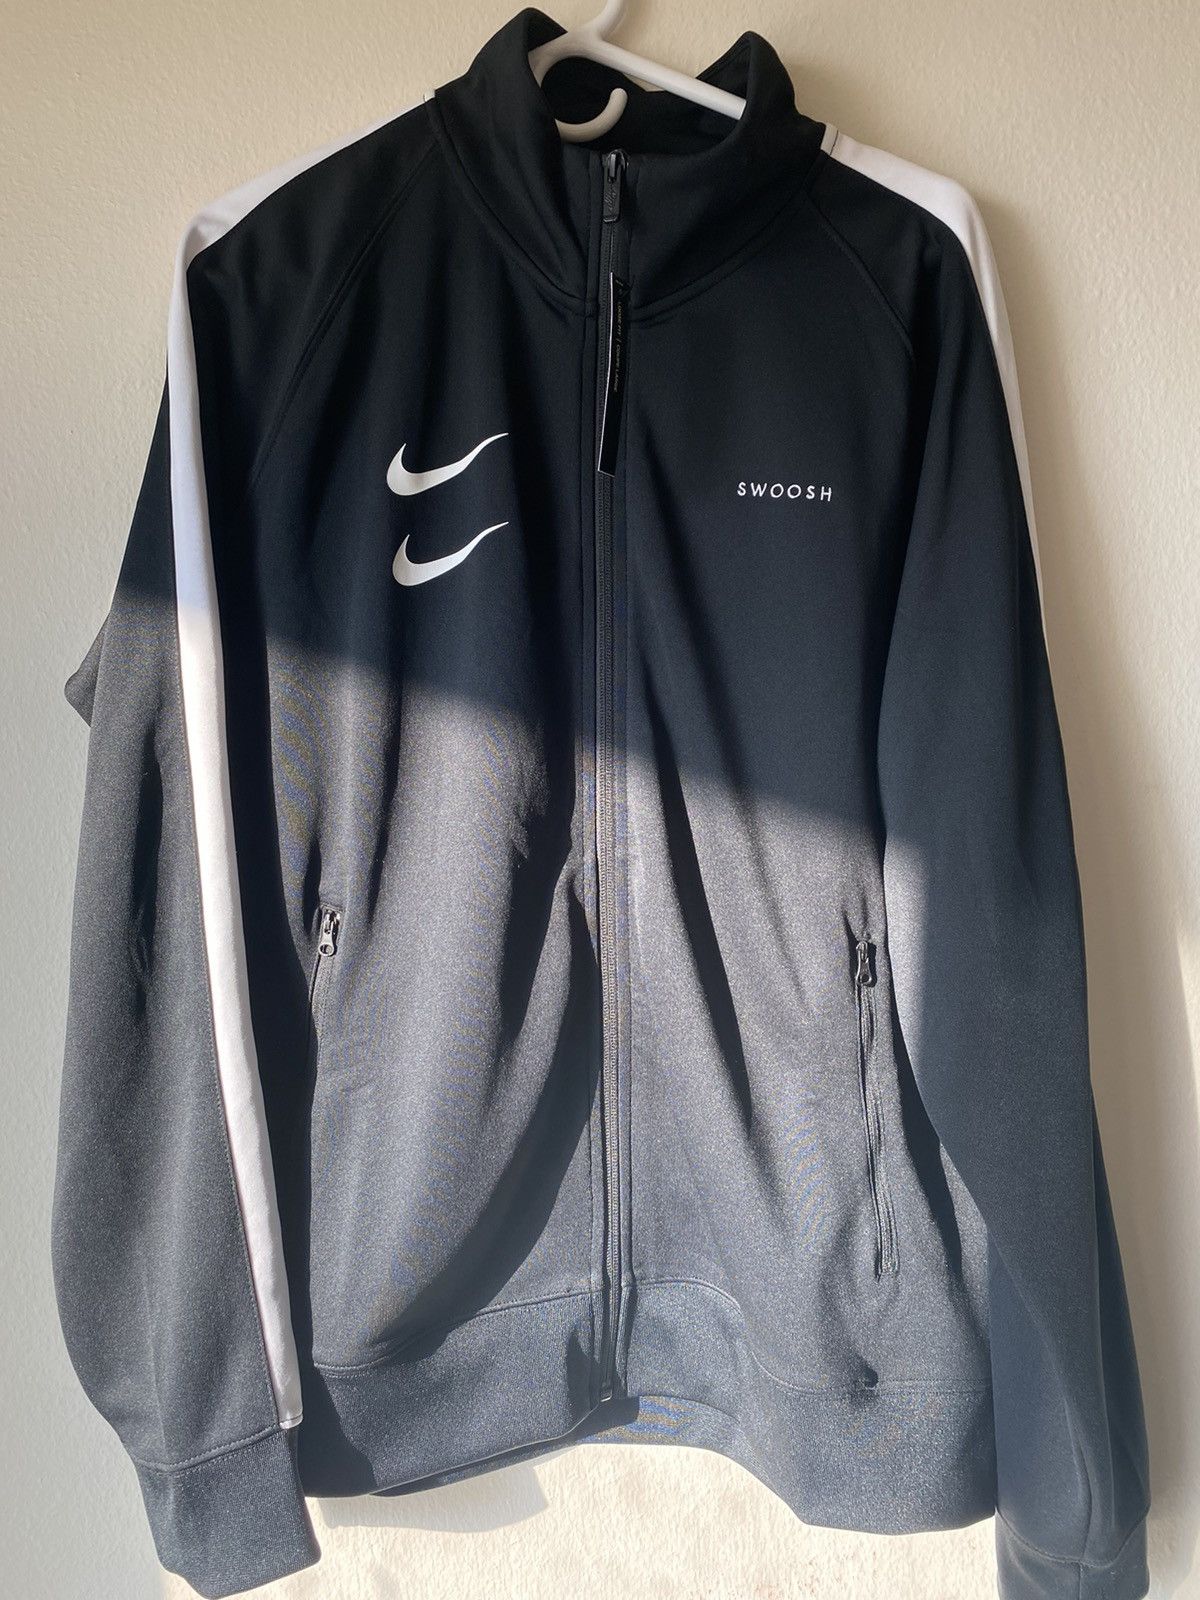 Nike Nike Double Swoosh jacket MCMLXXII | Grailed